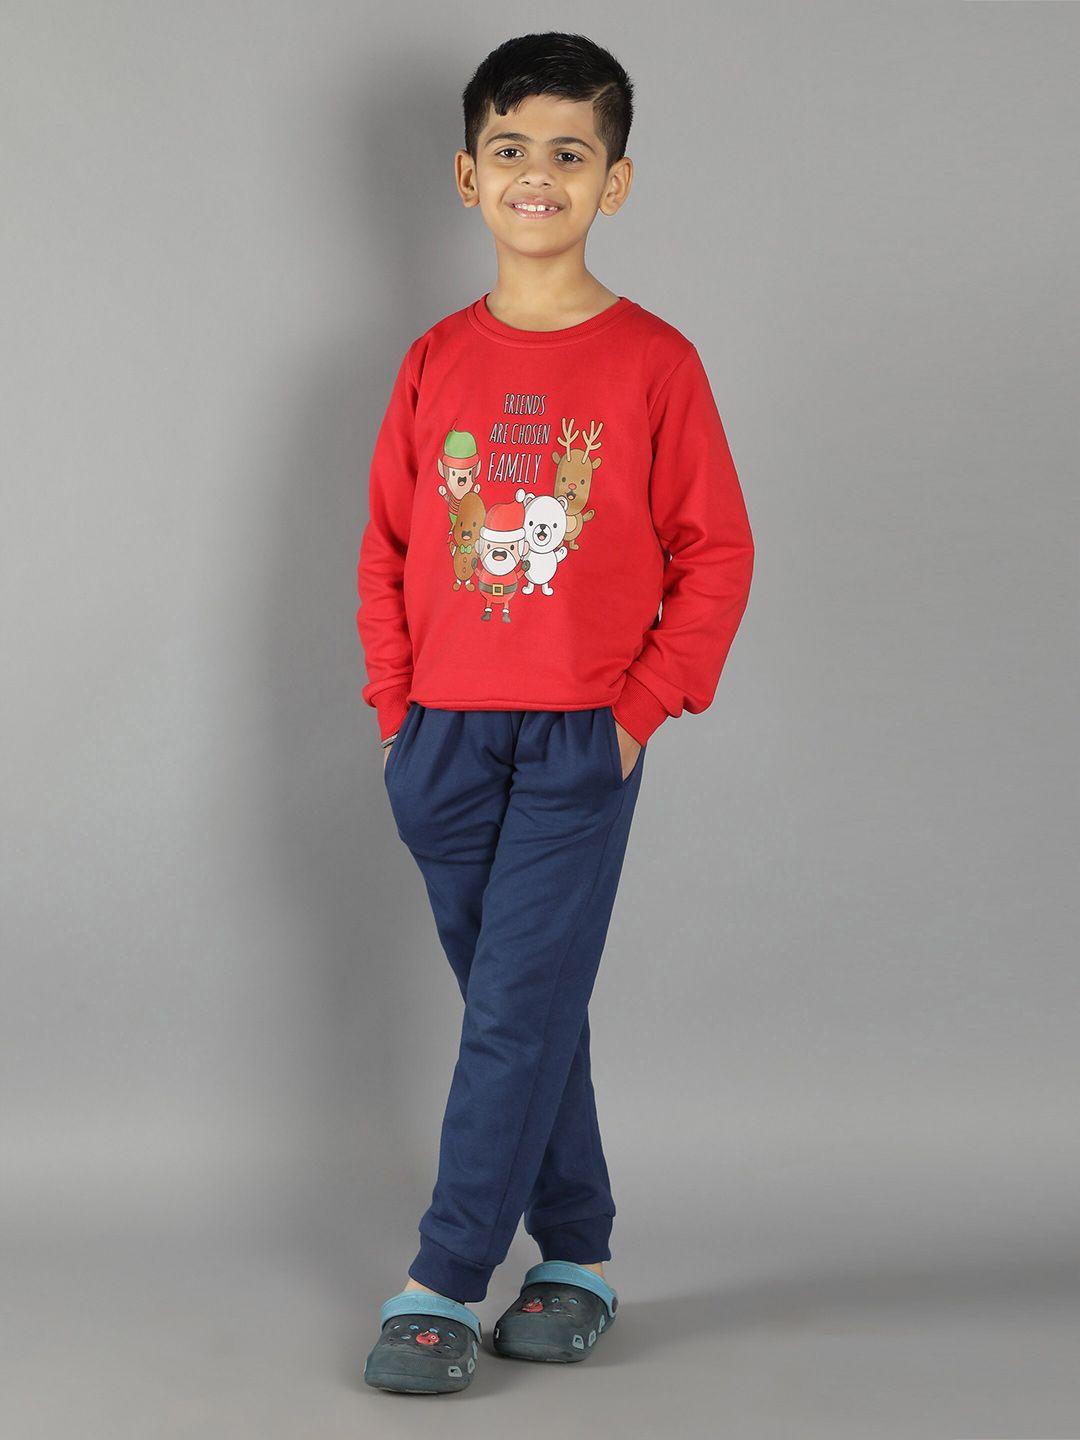 ninos dreams kids red christmas family printed fleece sweatshirt